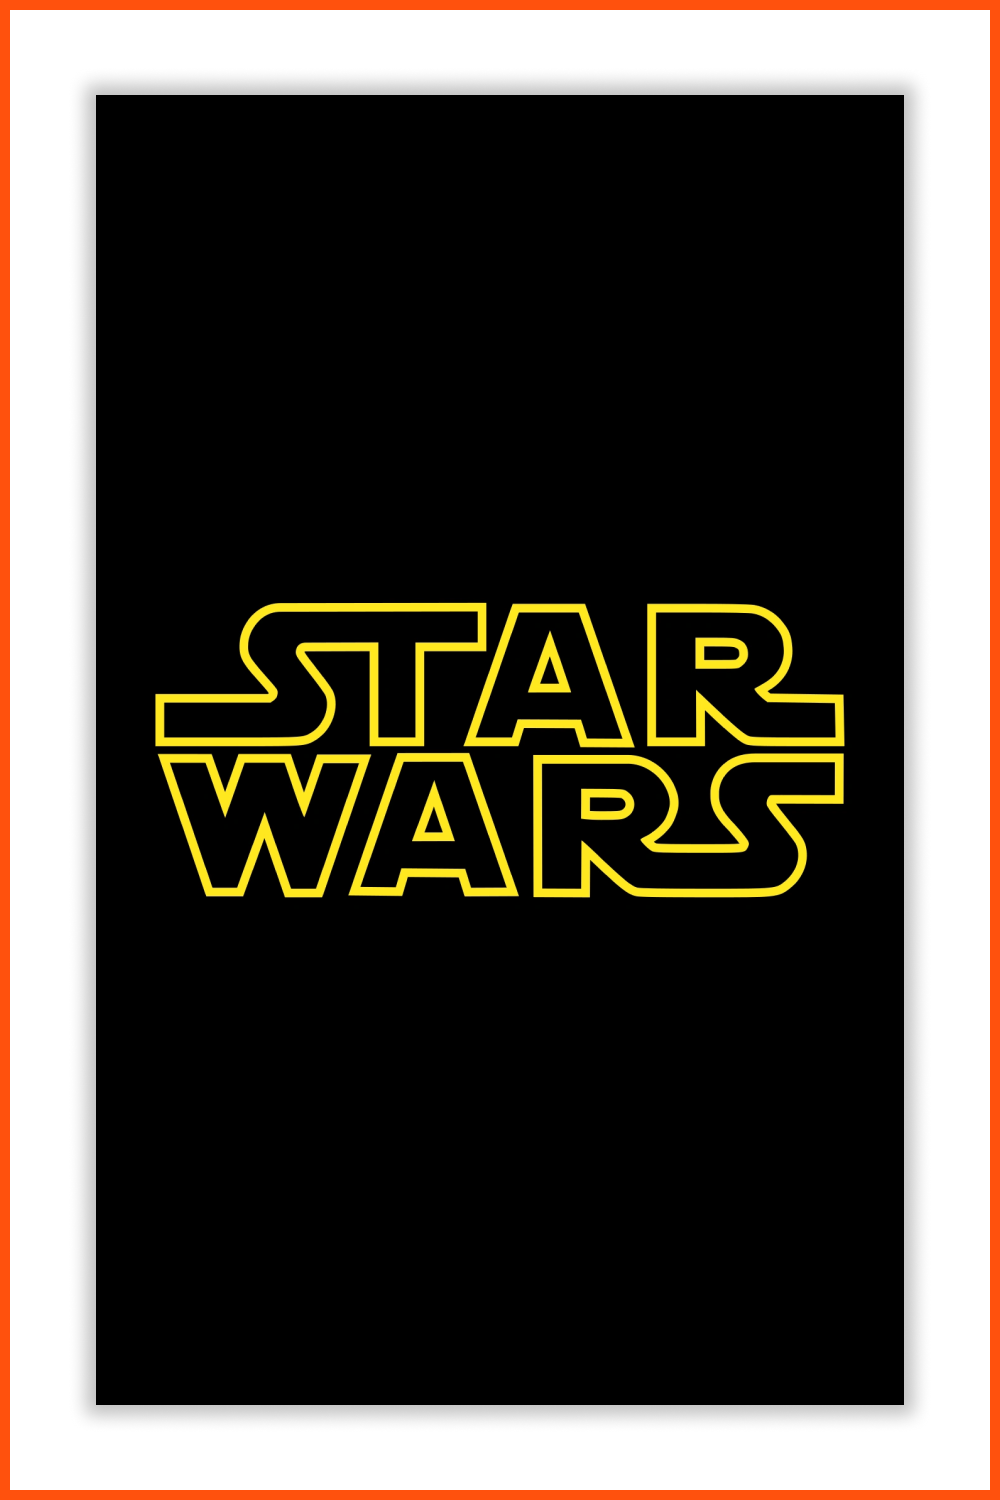 Yellow Star Wars logo on black background.